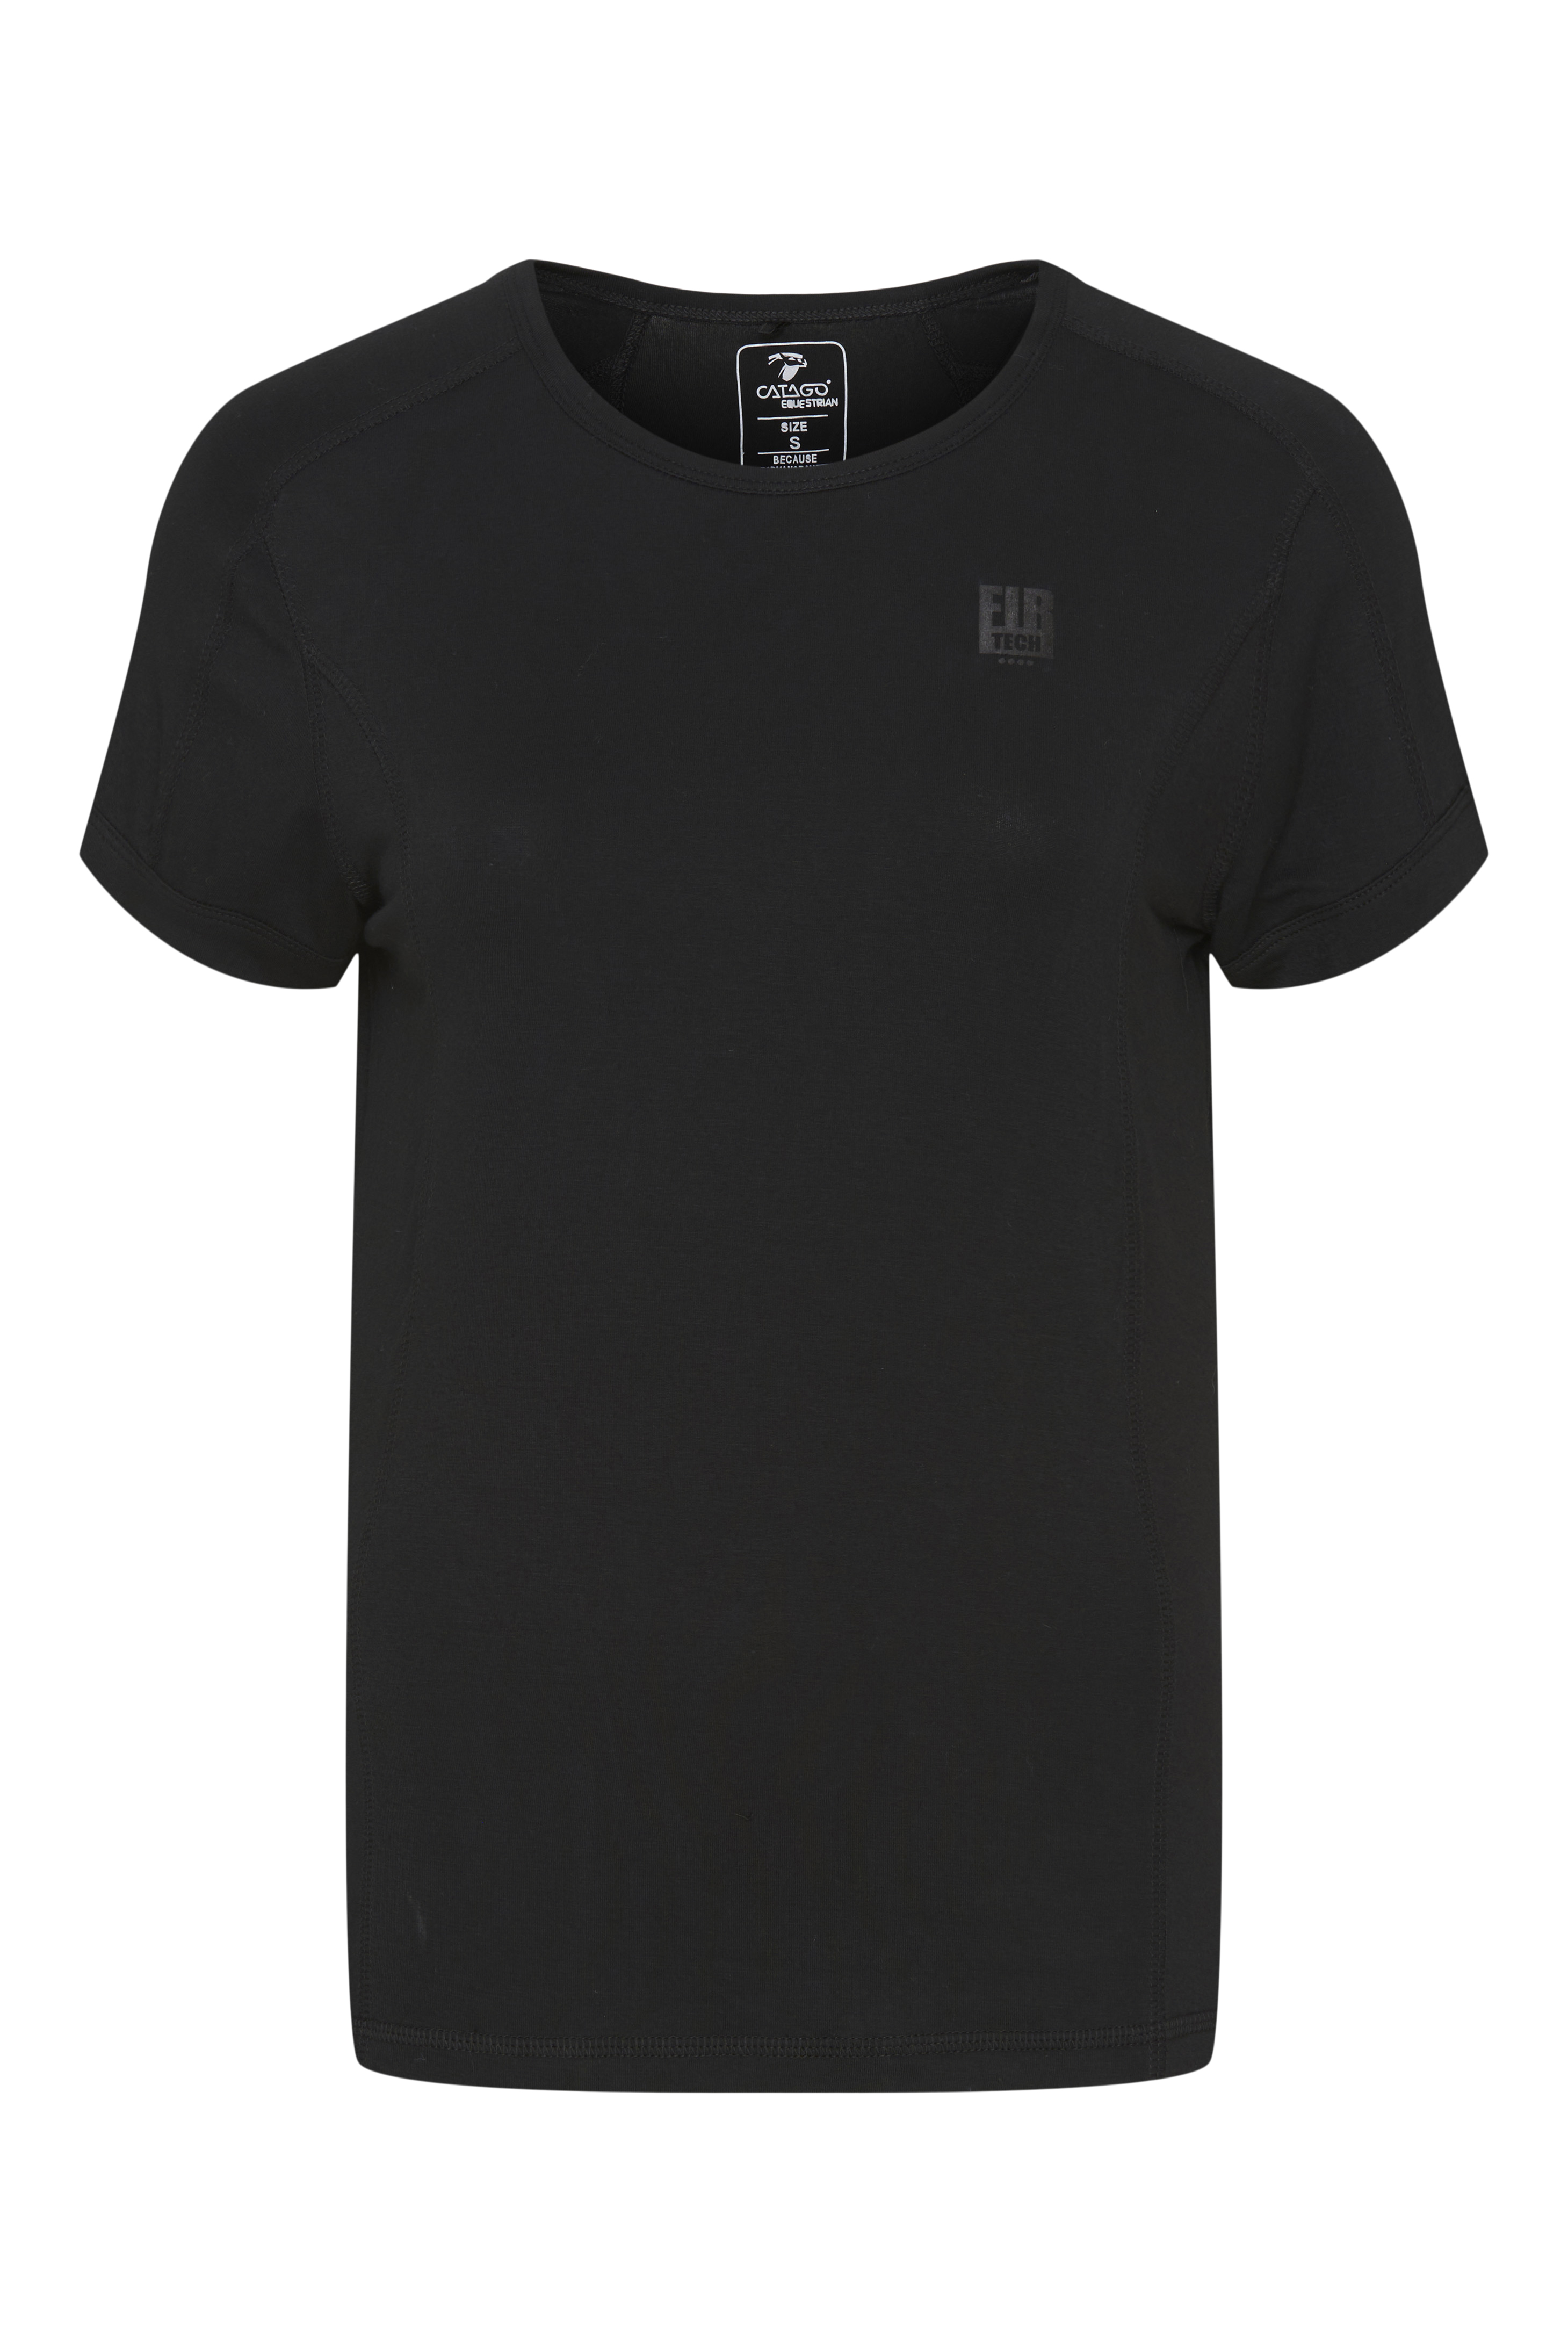 CATAGO FIR-Tech T-shirt - Black, Catago